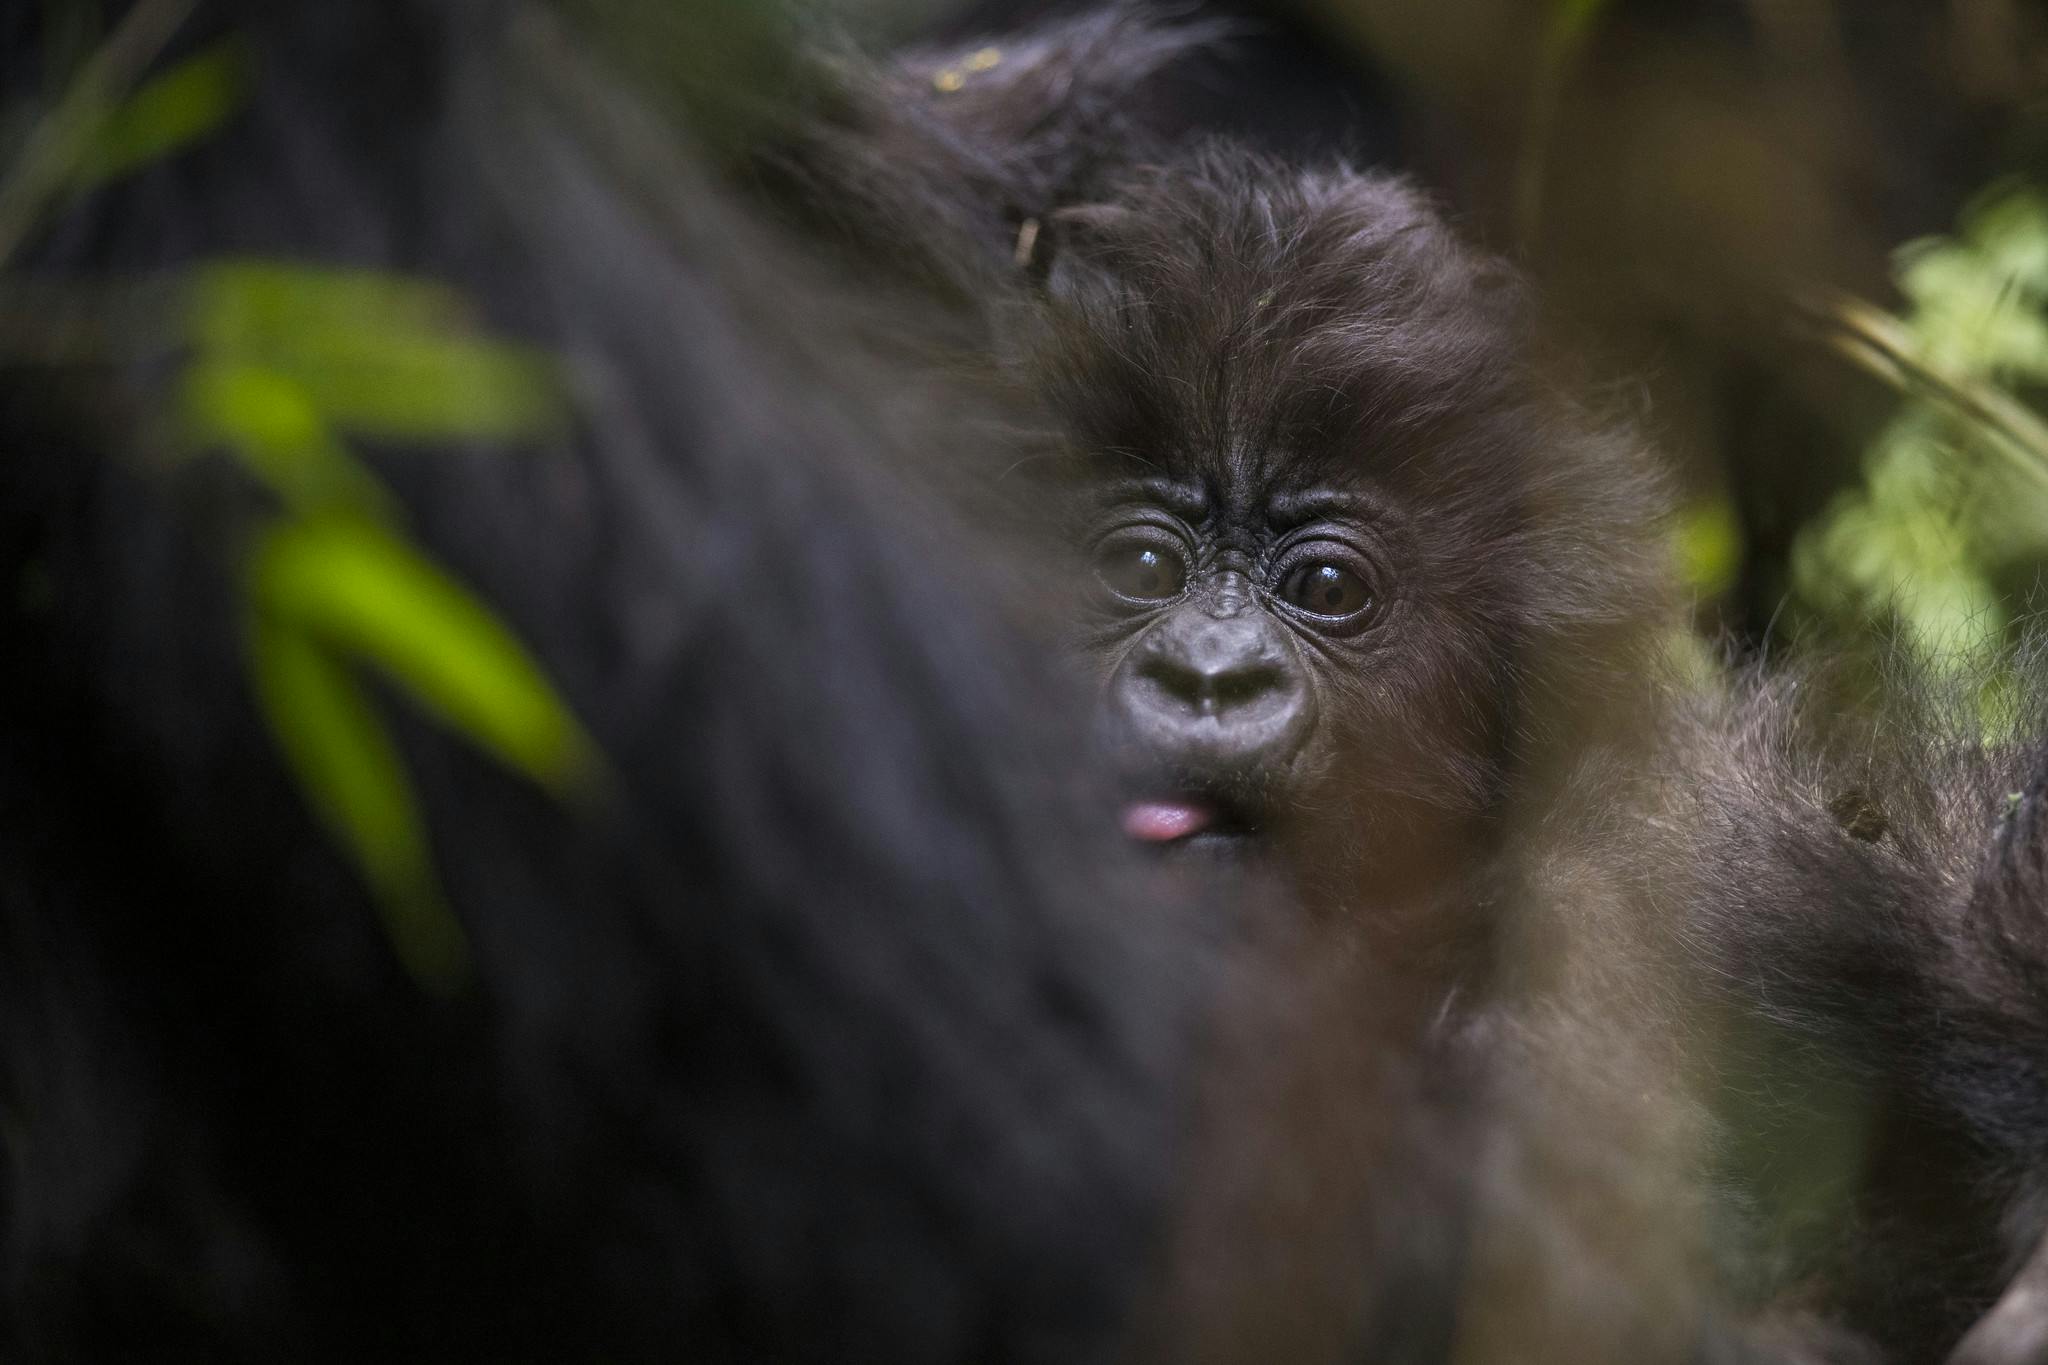 Another baby gorilla friend (Image: Fossey Fund)